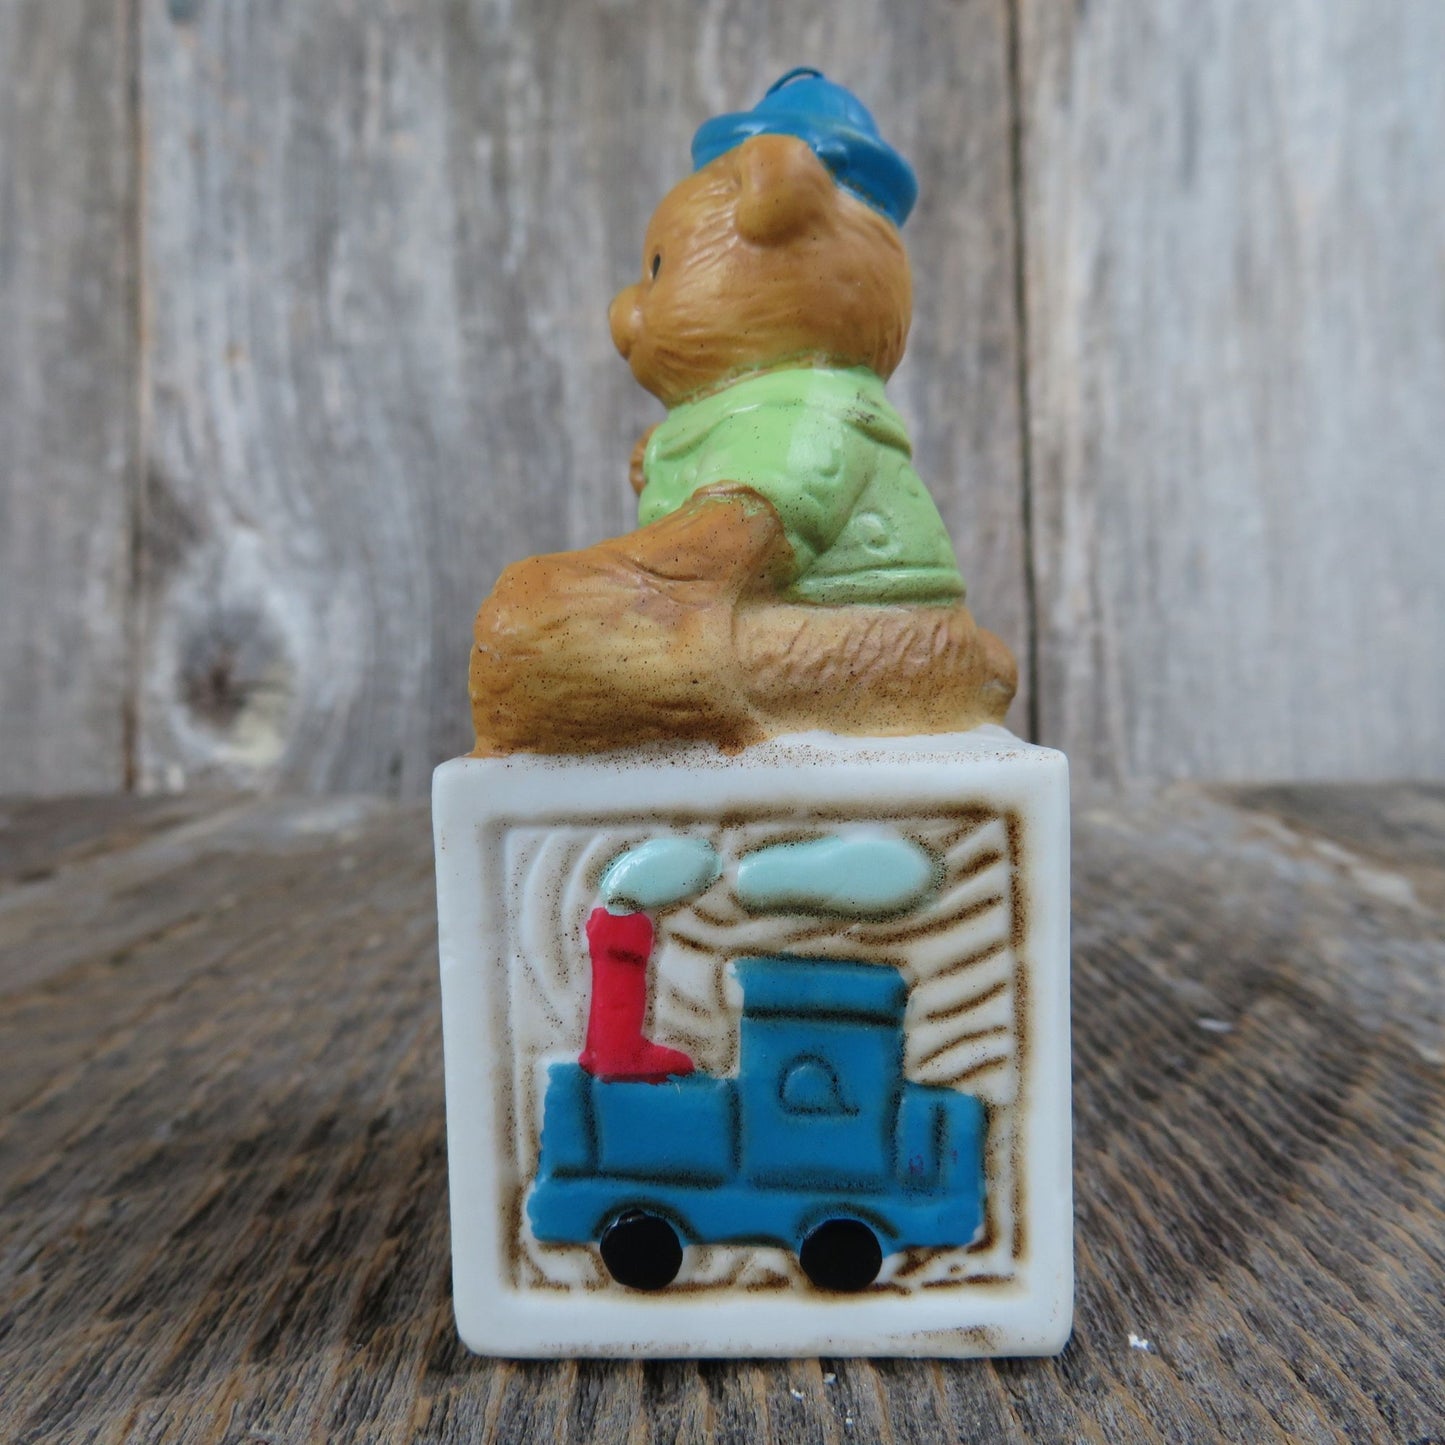 Vintage Bear on Alphabet Block Ornament Boy Blue Hat Green Ceramic Porcelain Christmas House of Lloyd